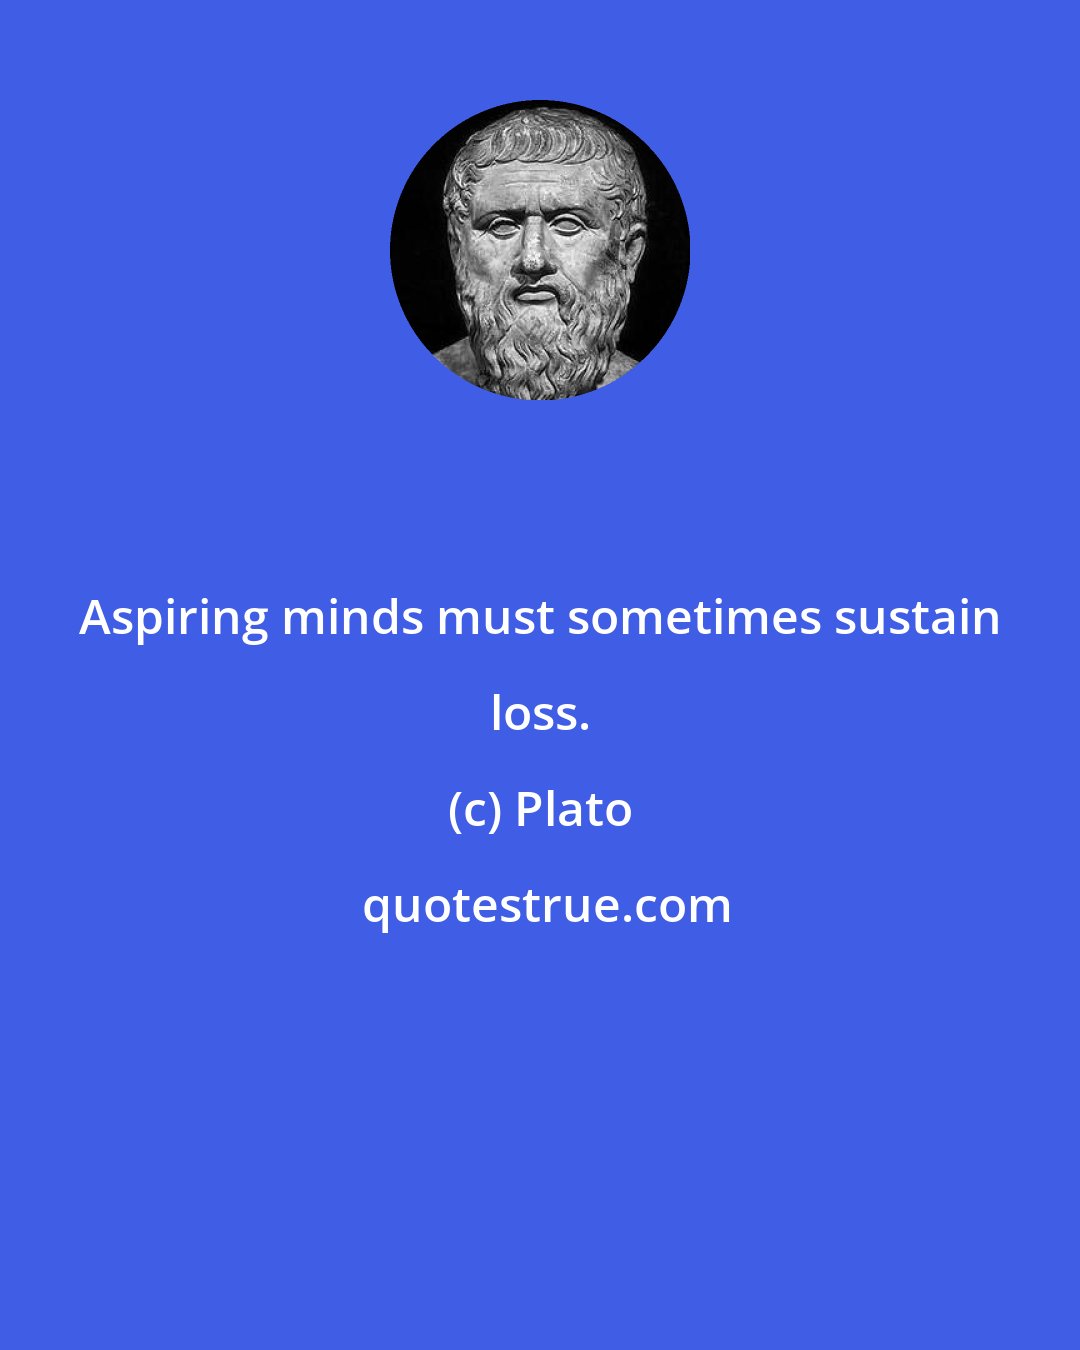 Plato: Aspiring minds must sometimes sustain loss.